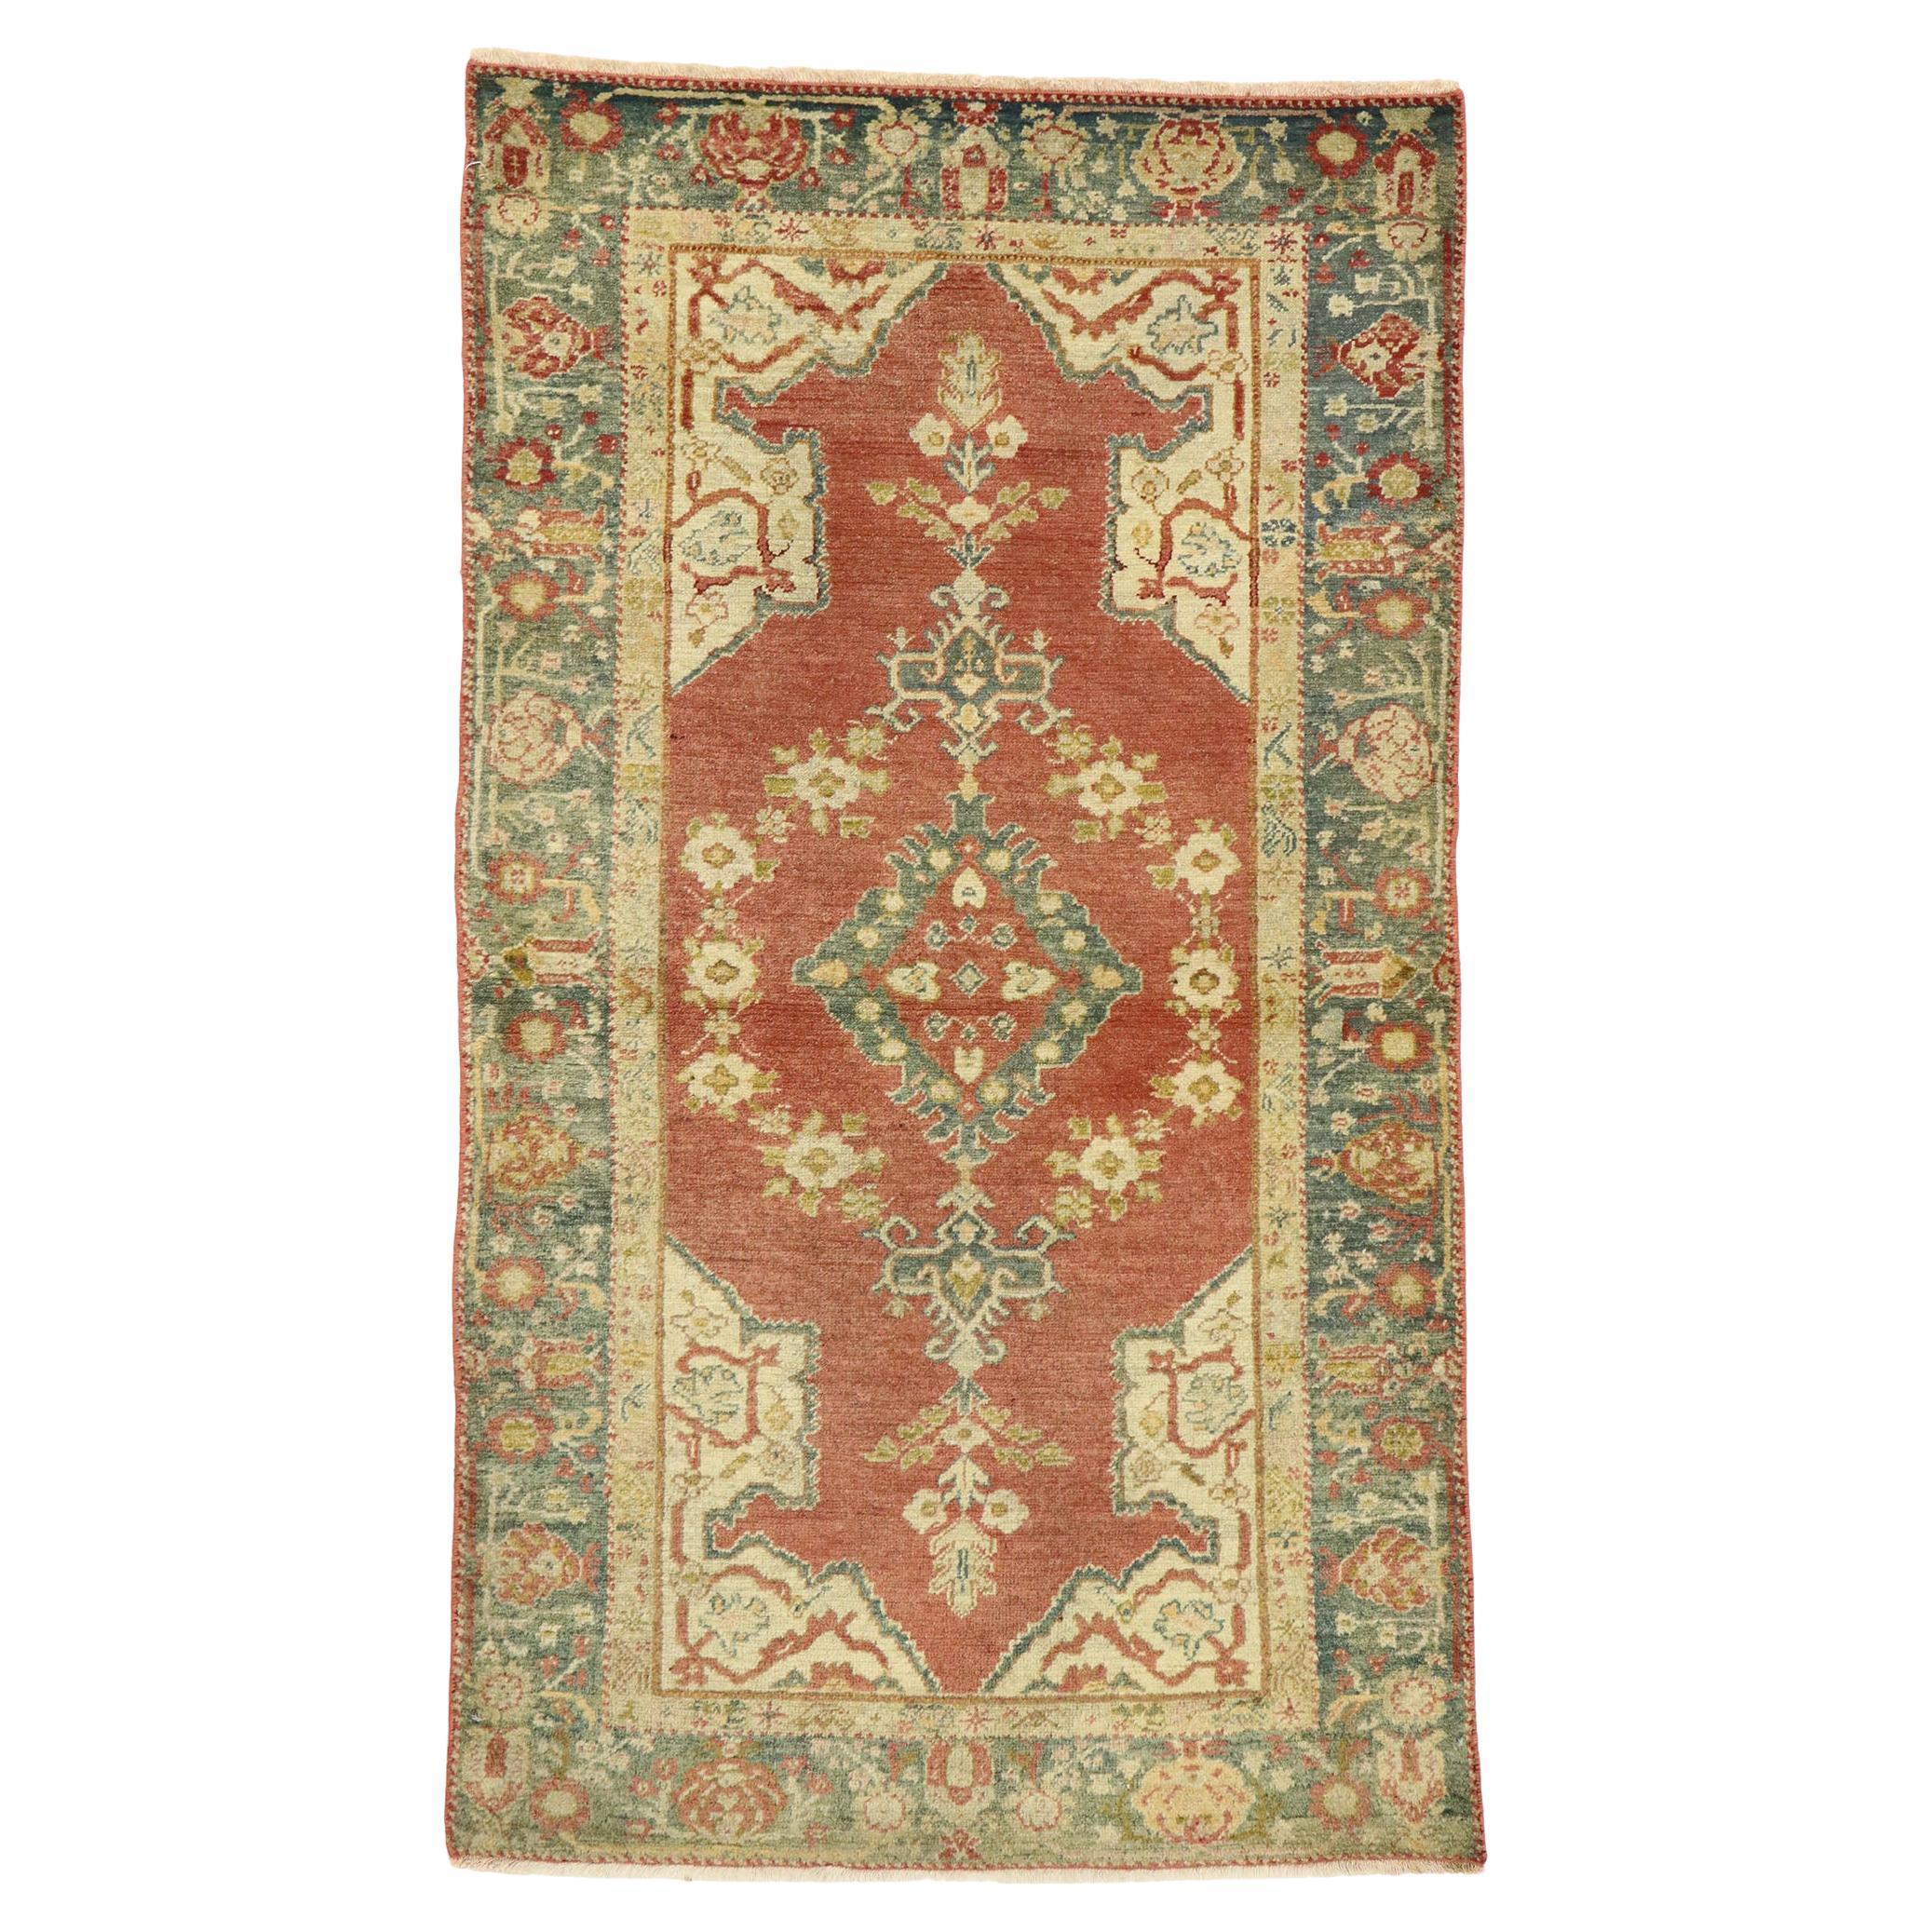 Vintage Red and Green Turkish Oushak Carpet